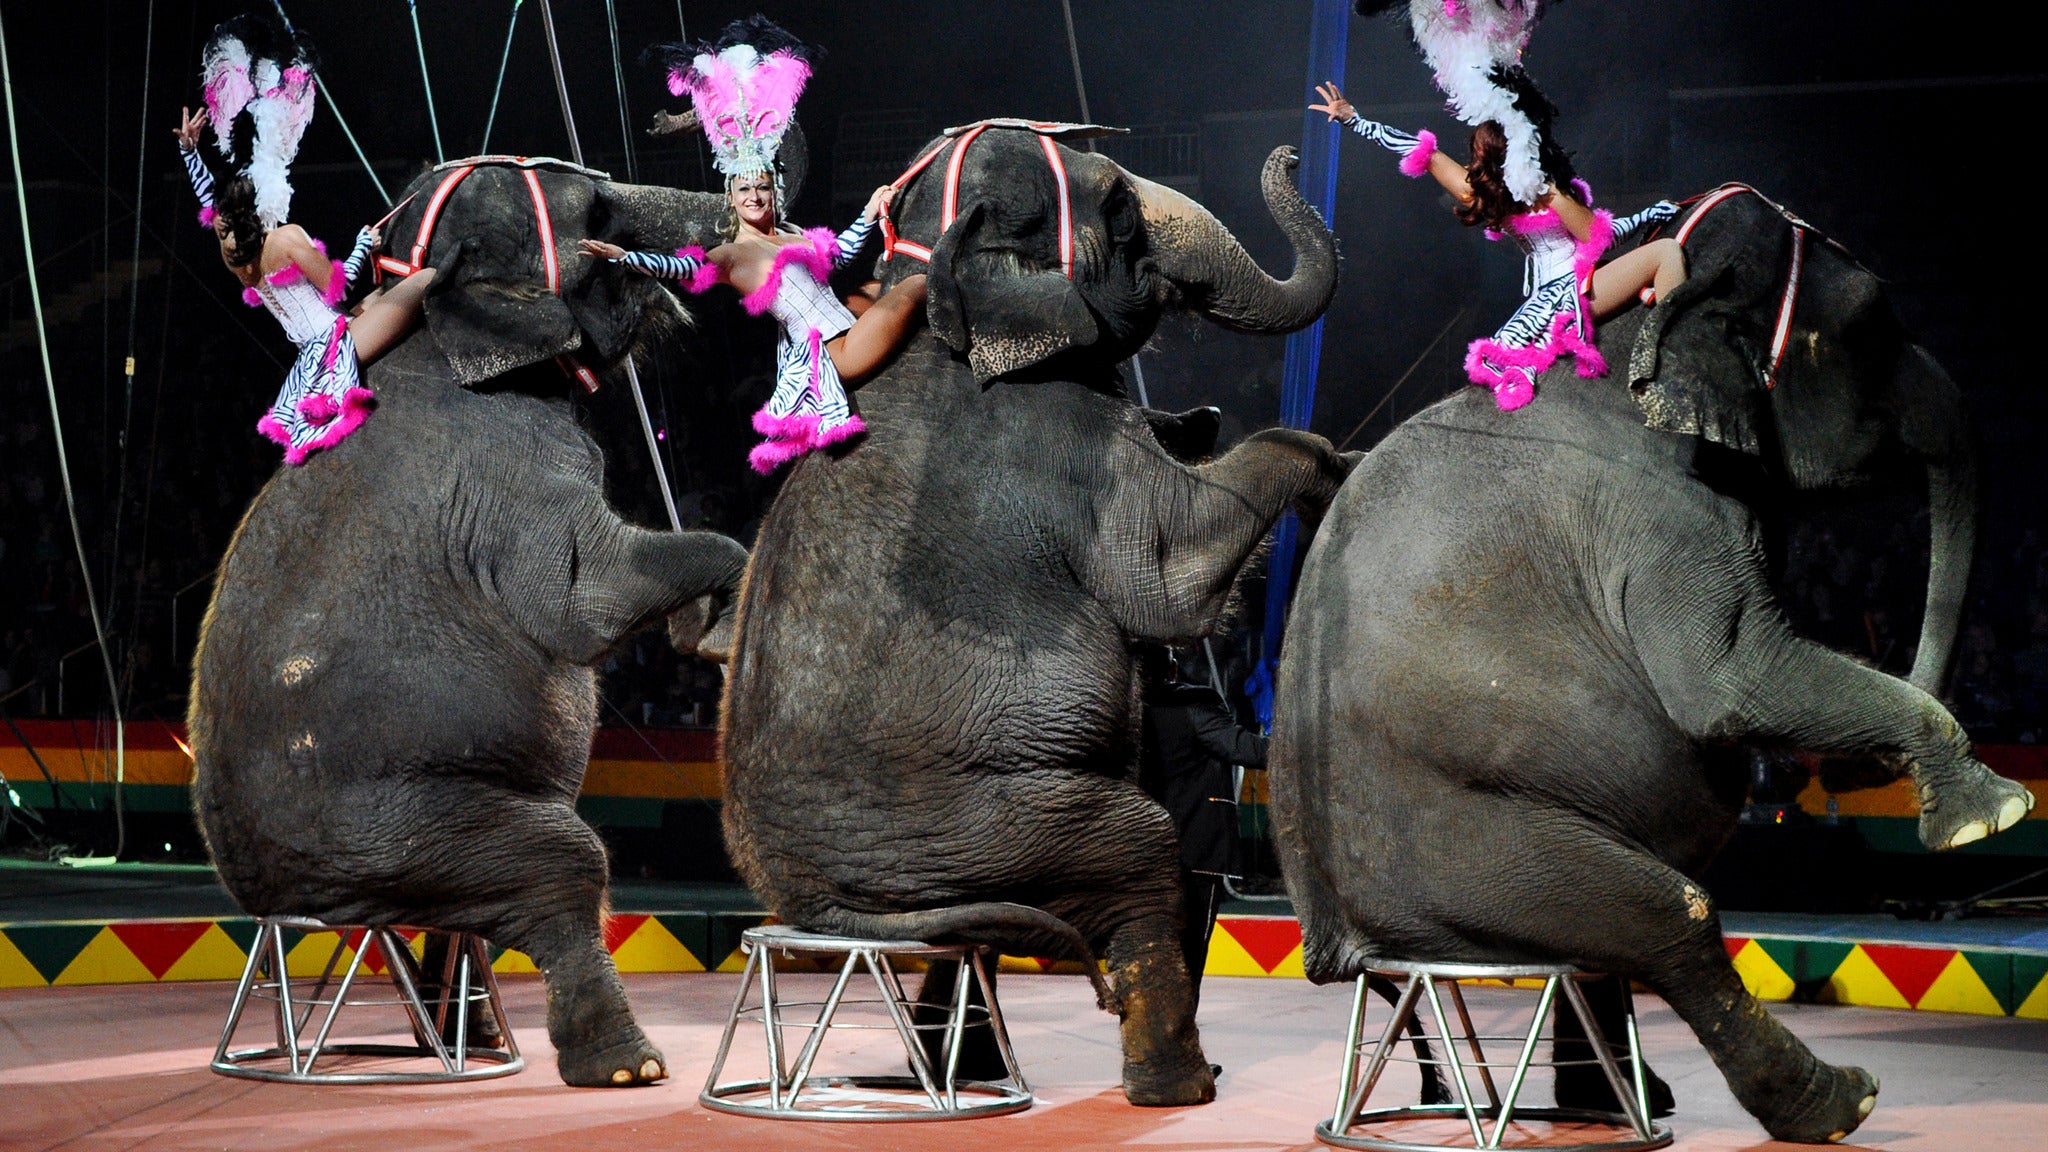 Hadi Shrine Circus in Evansville promo photo for Box Office presale offer code